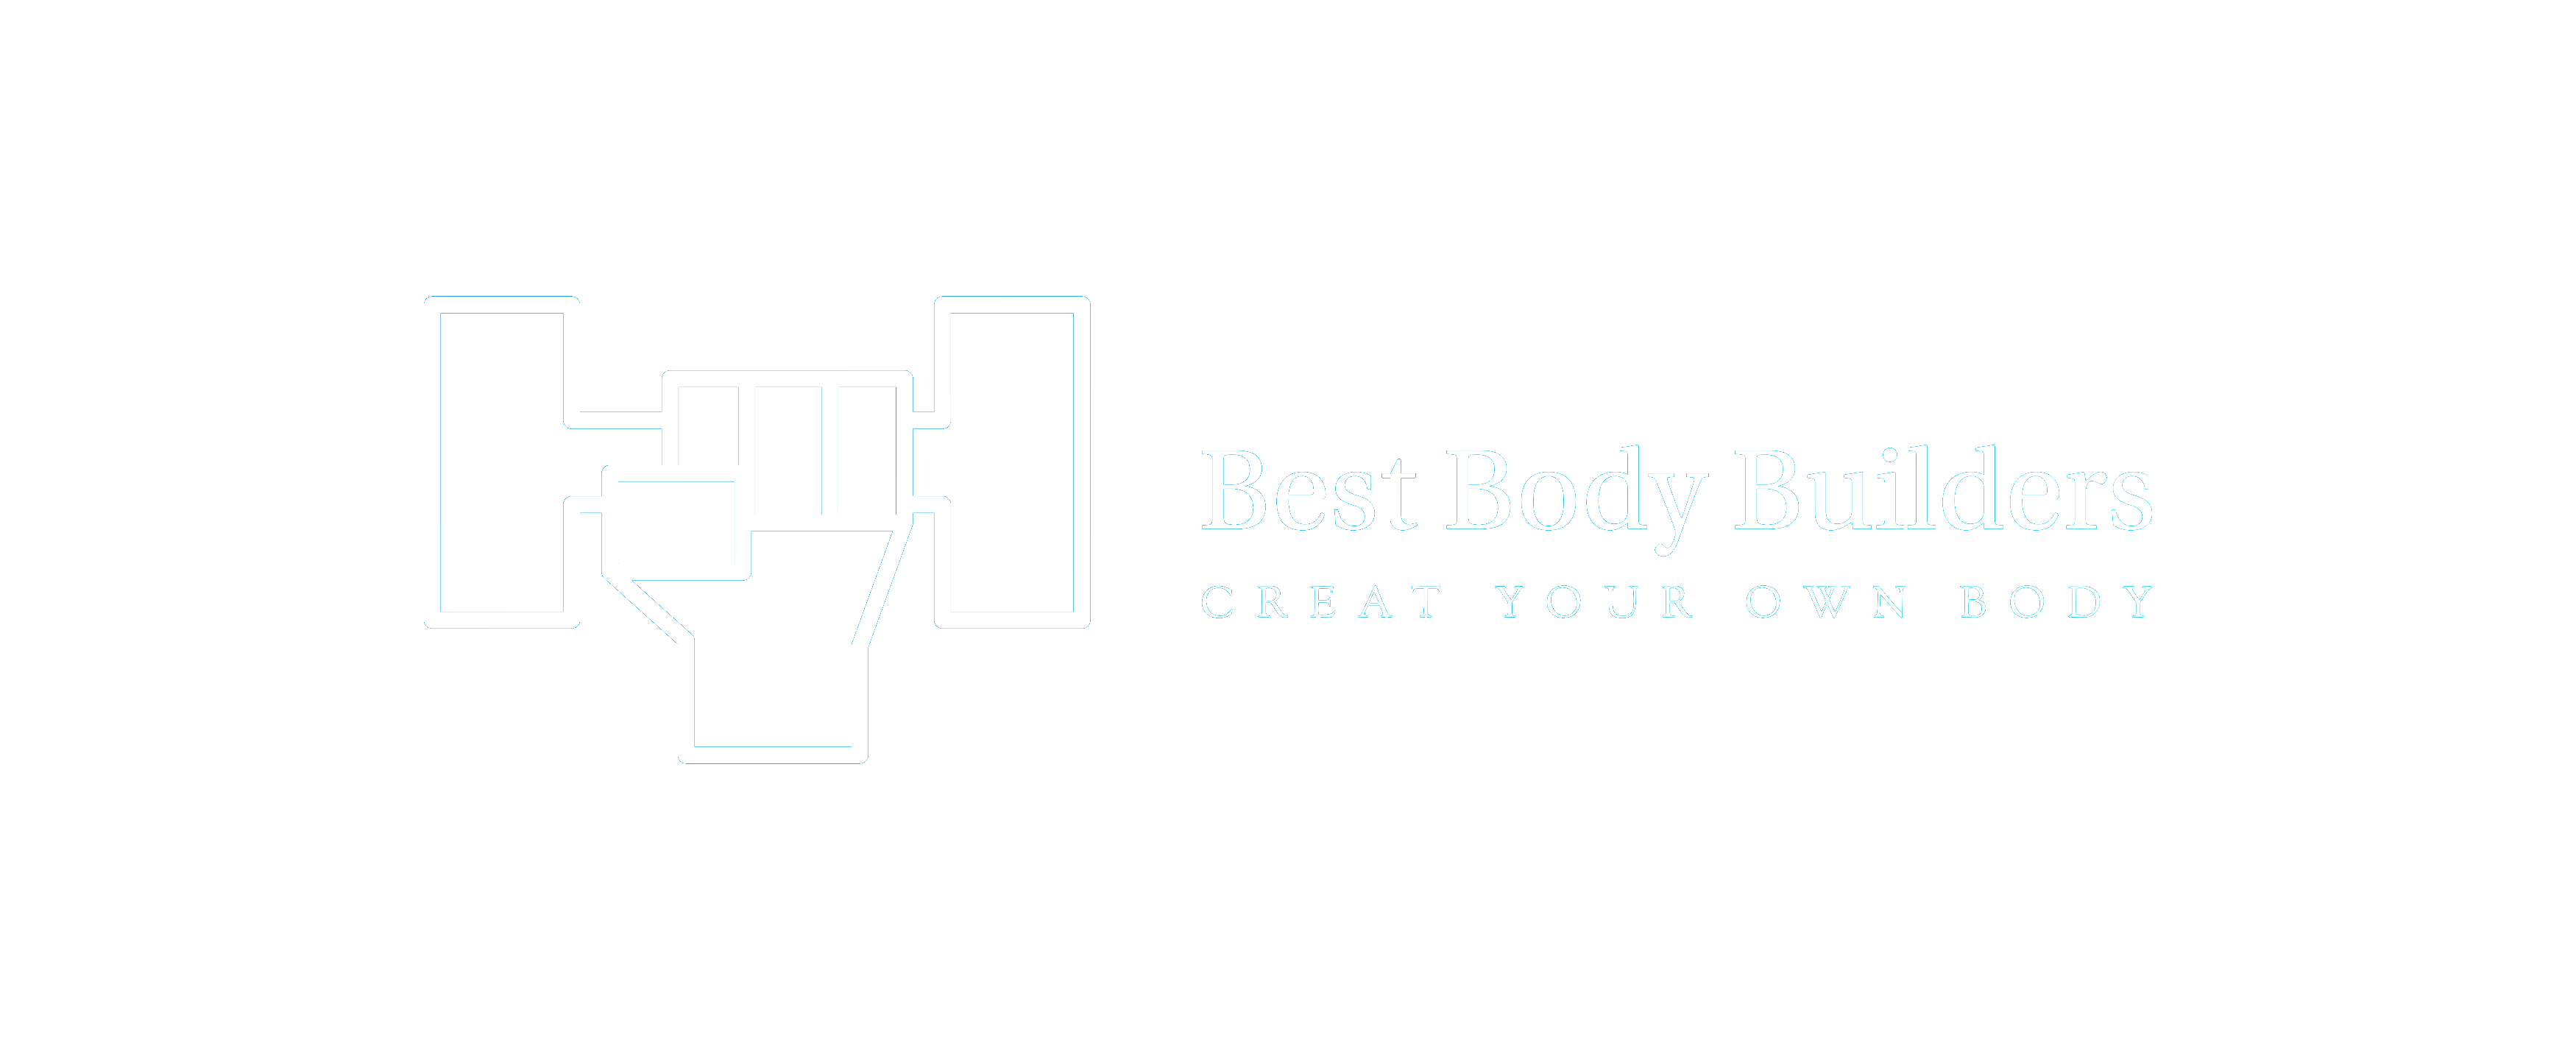 Best Body Builders